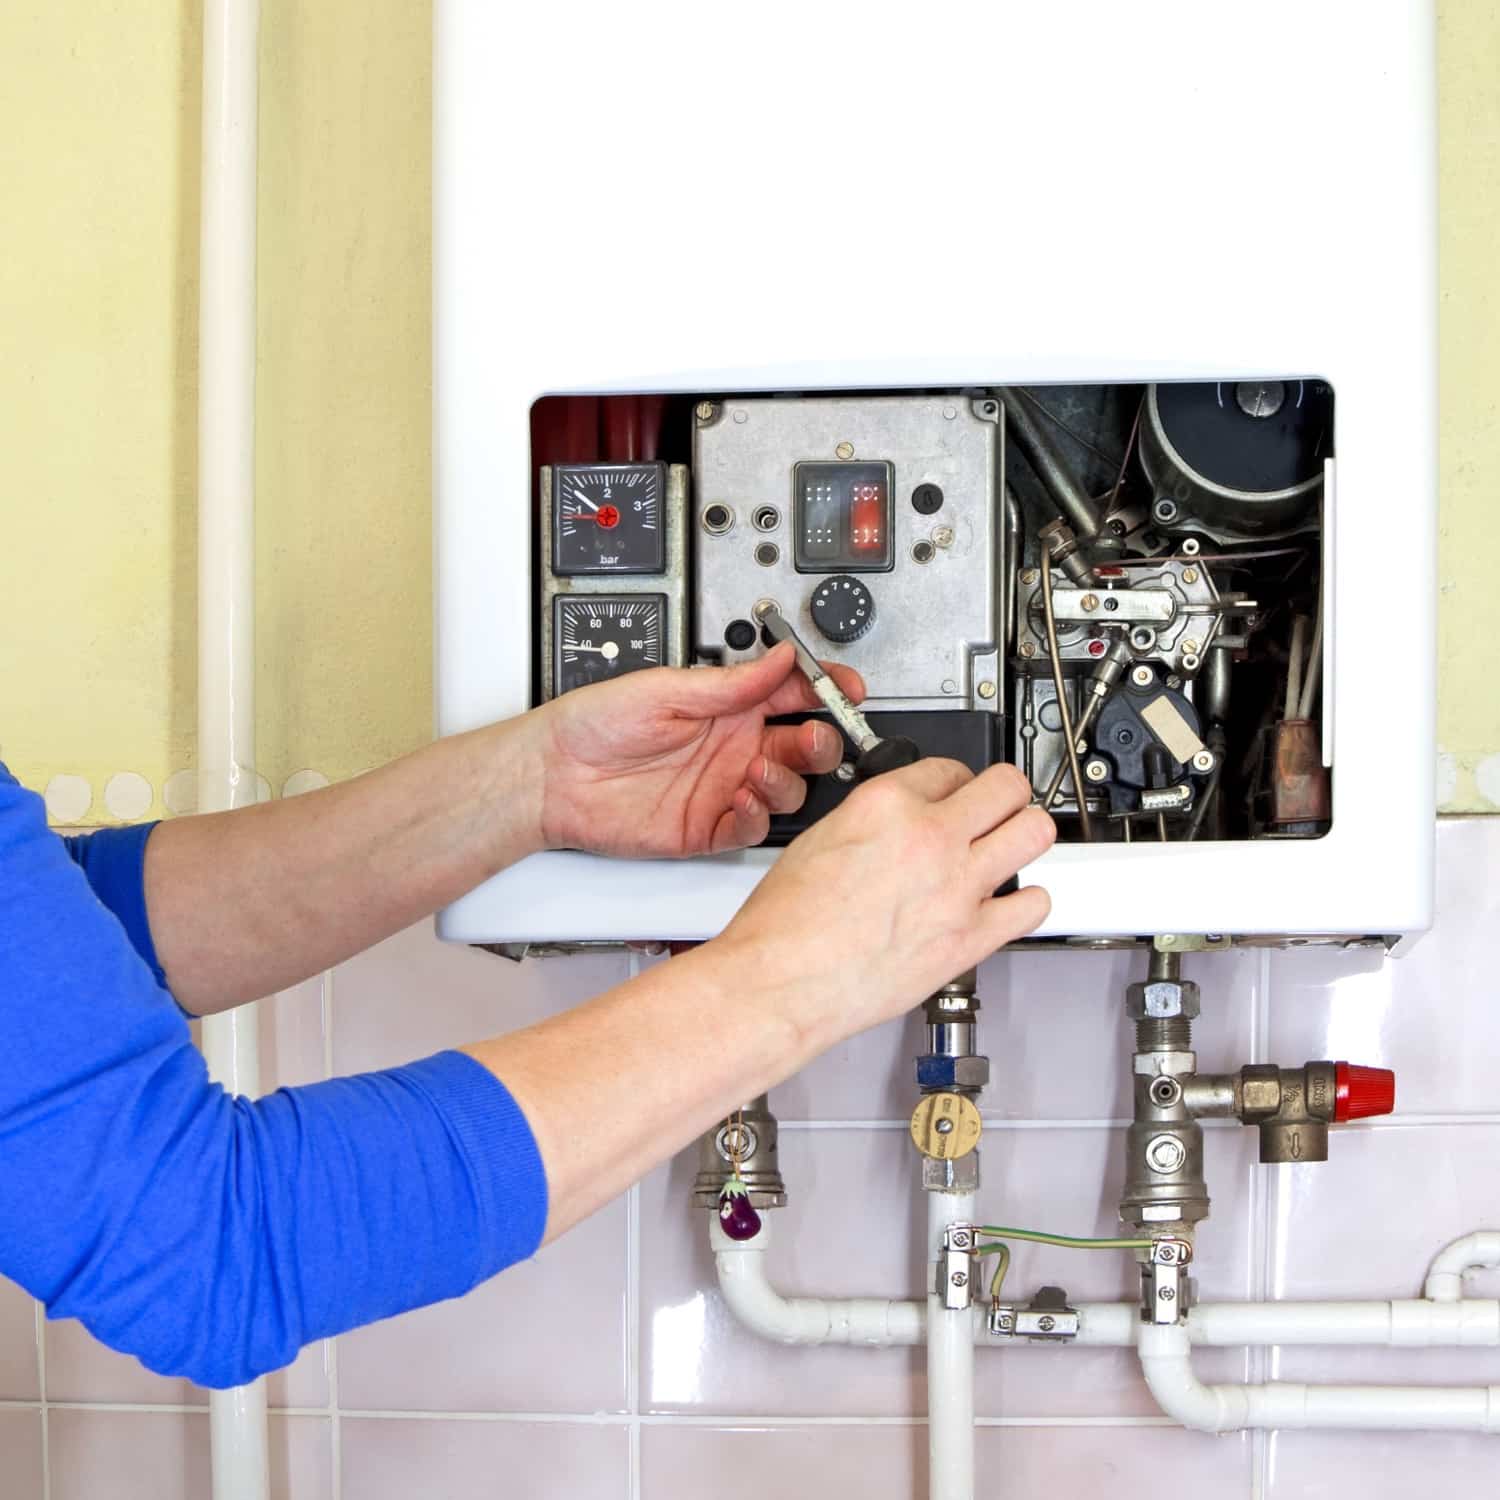 Plumber performing repairs on a tankless water heater